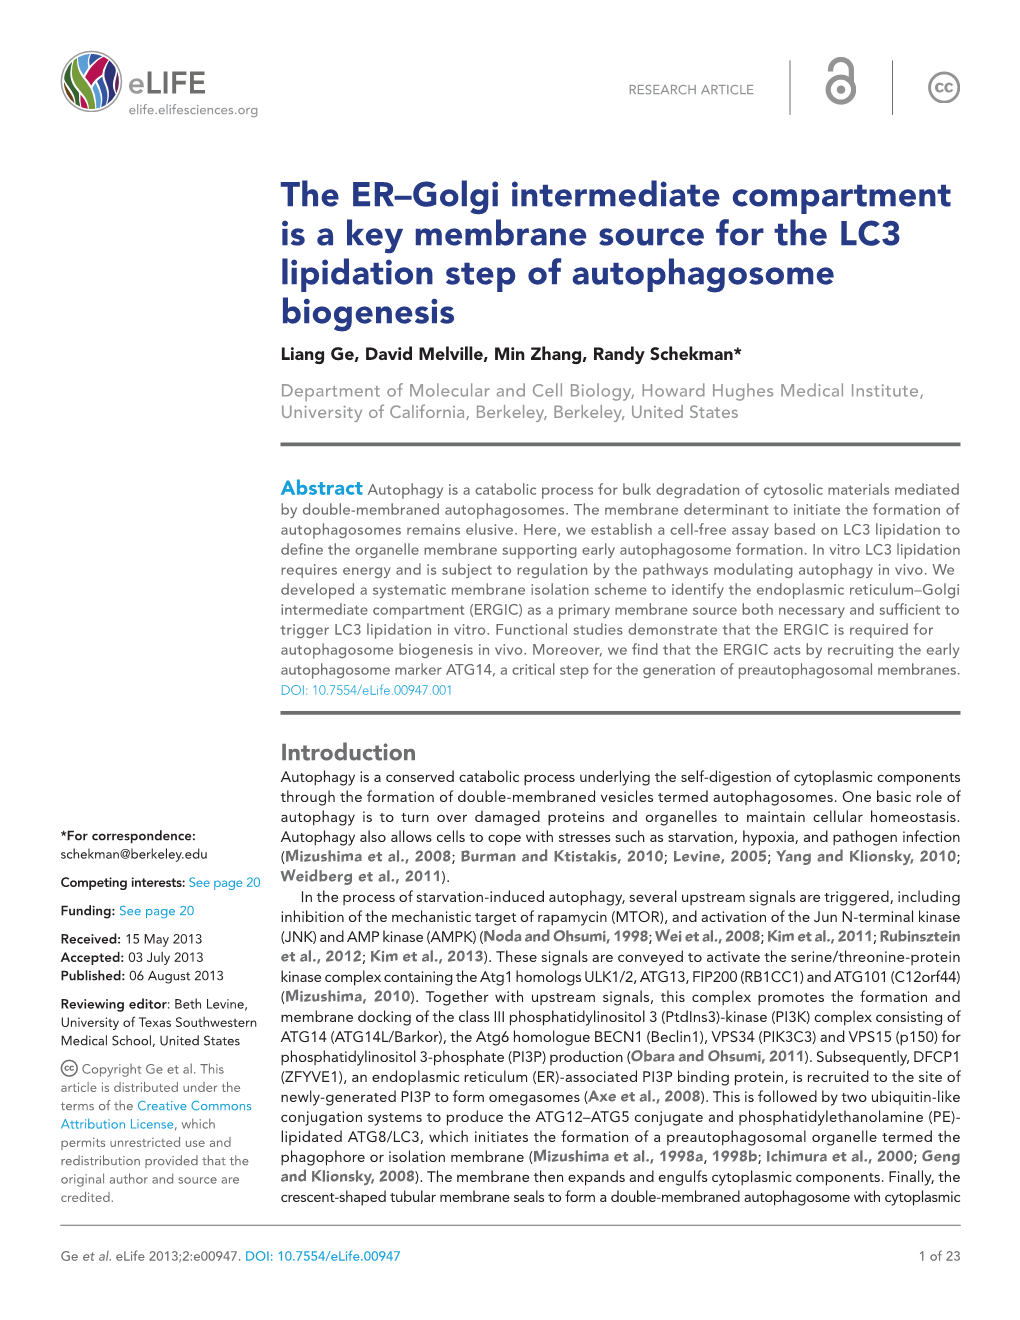 The ER–Golgi Intermediate Compartment Is a Key Membrane